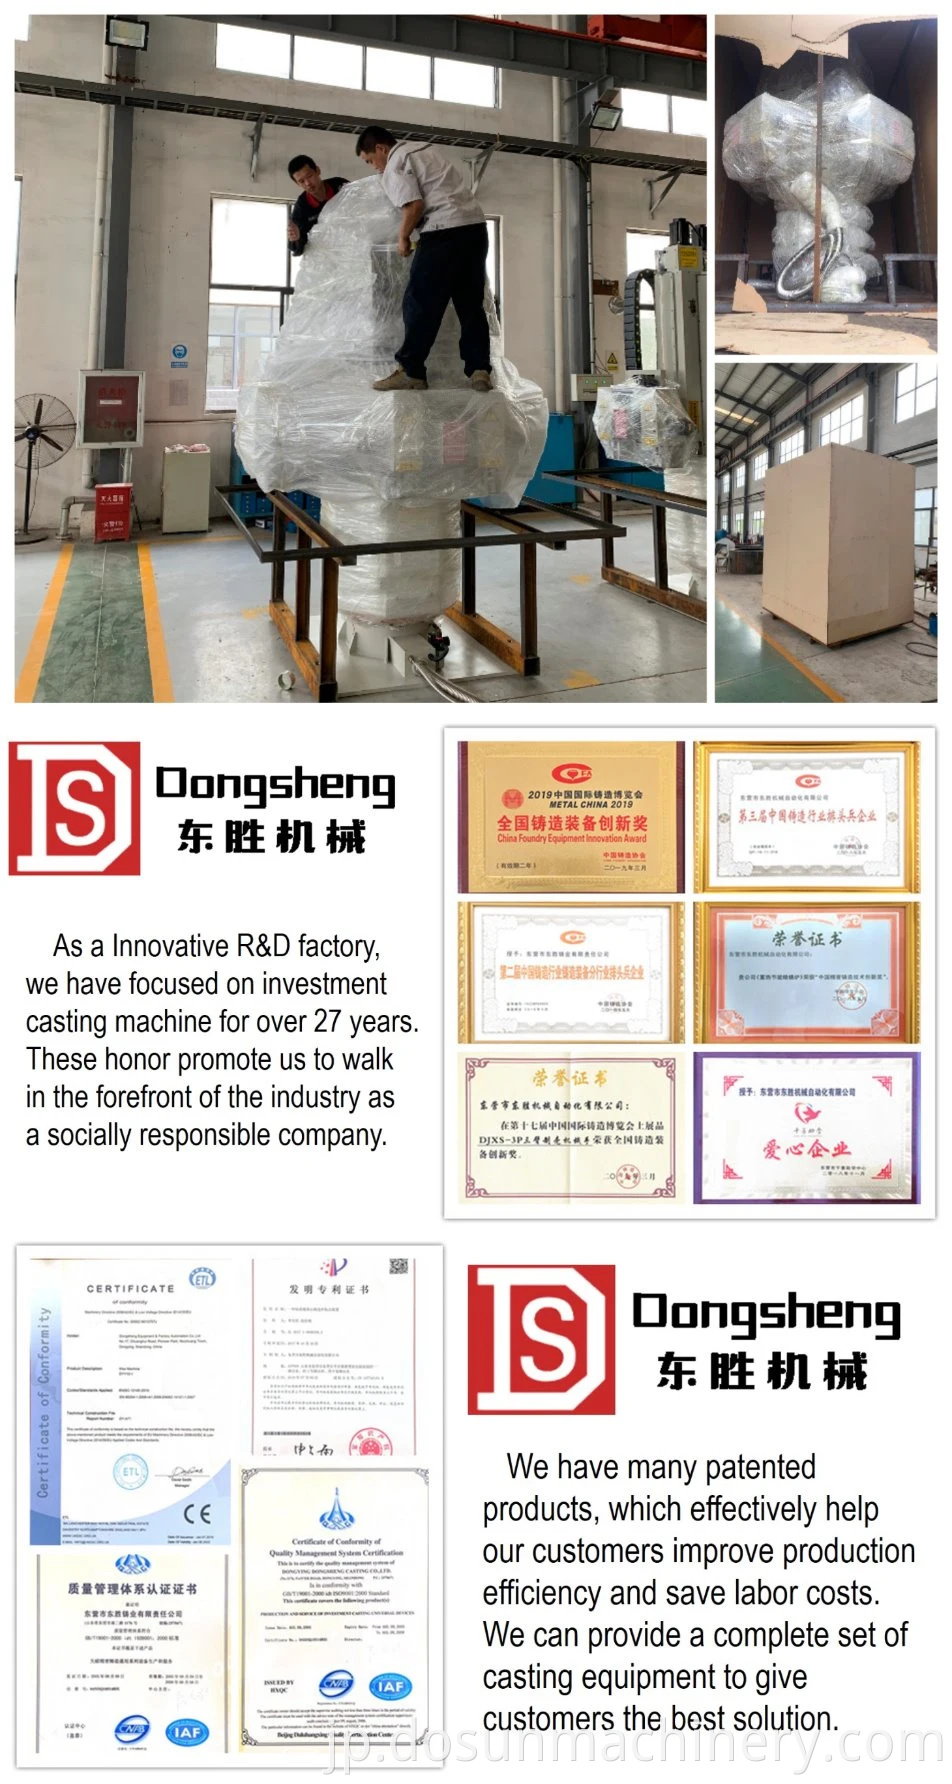 CEを用いたDongsheng鋳造ワックスインジェクタオート部品の生産